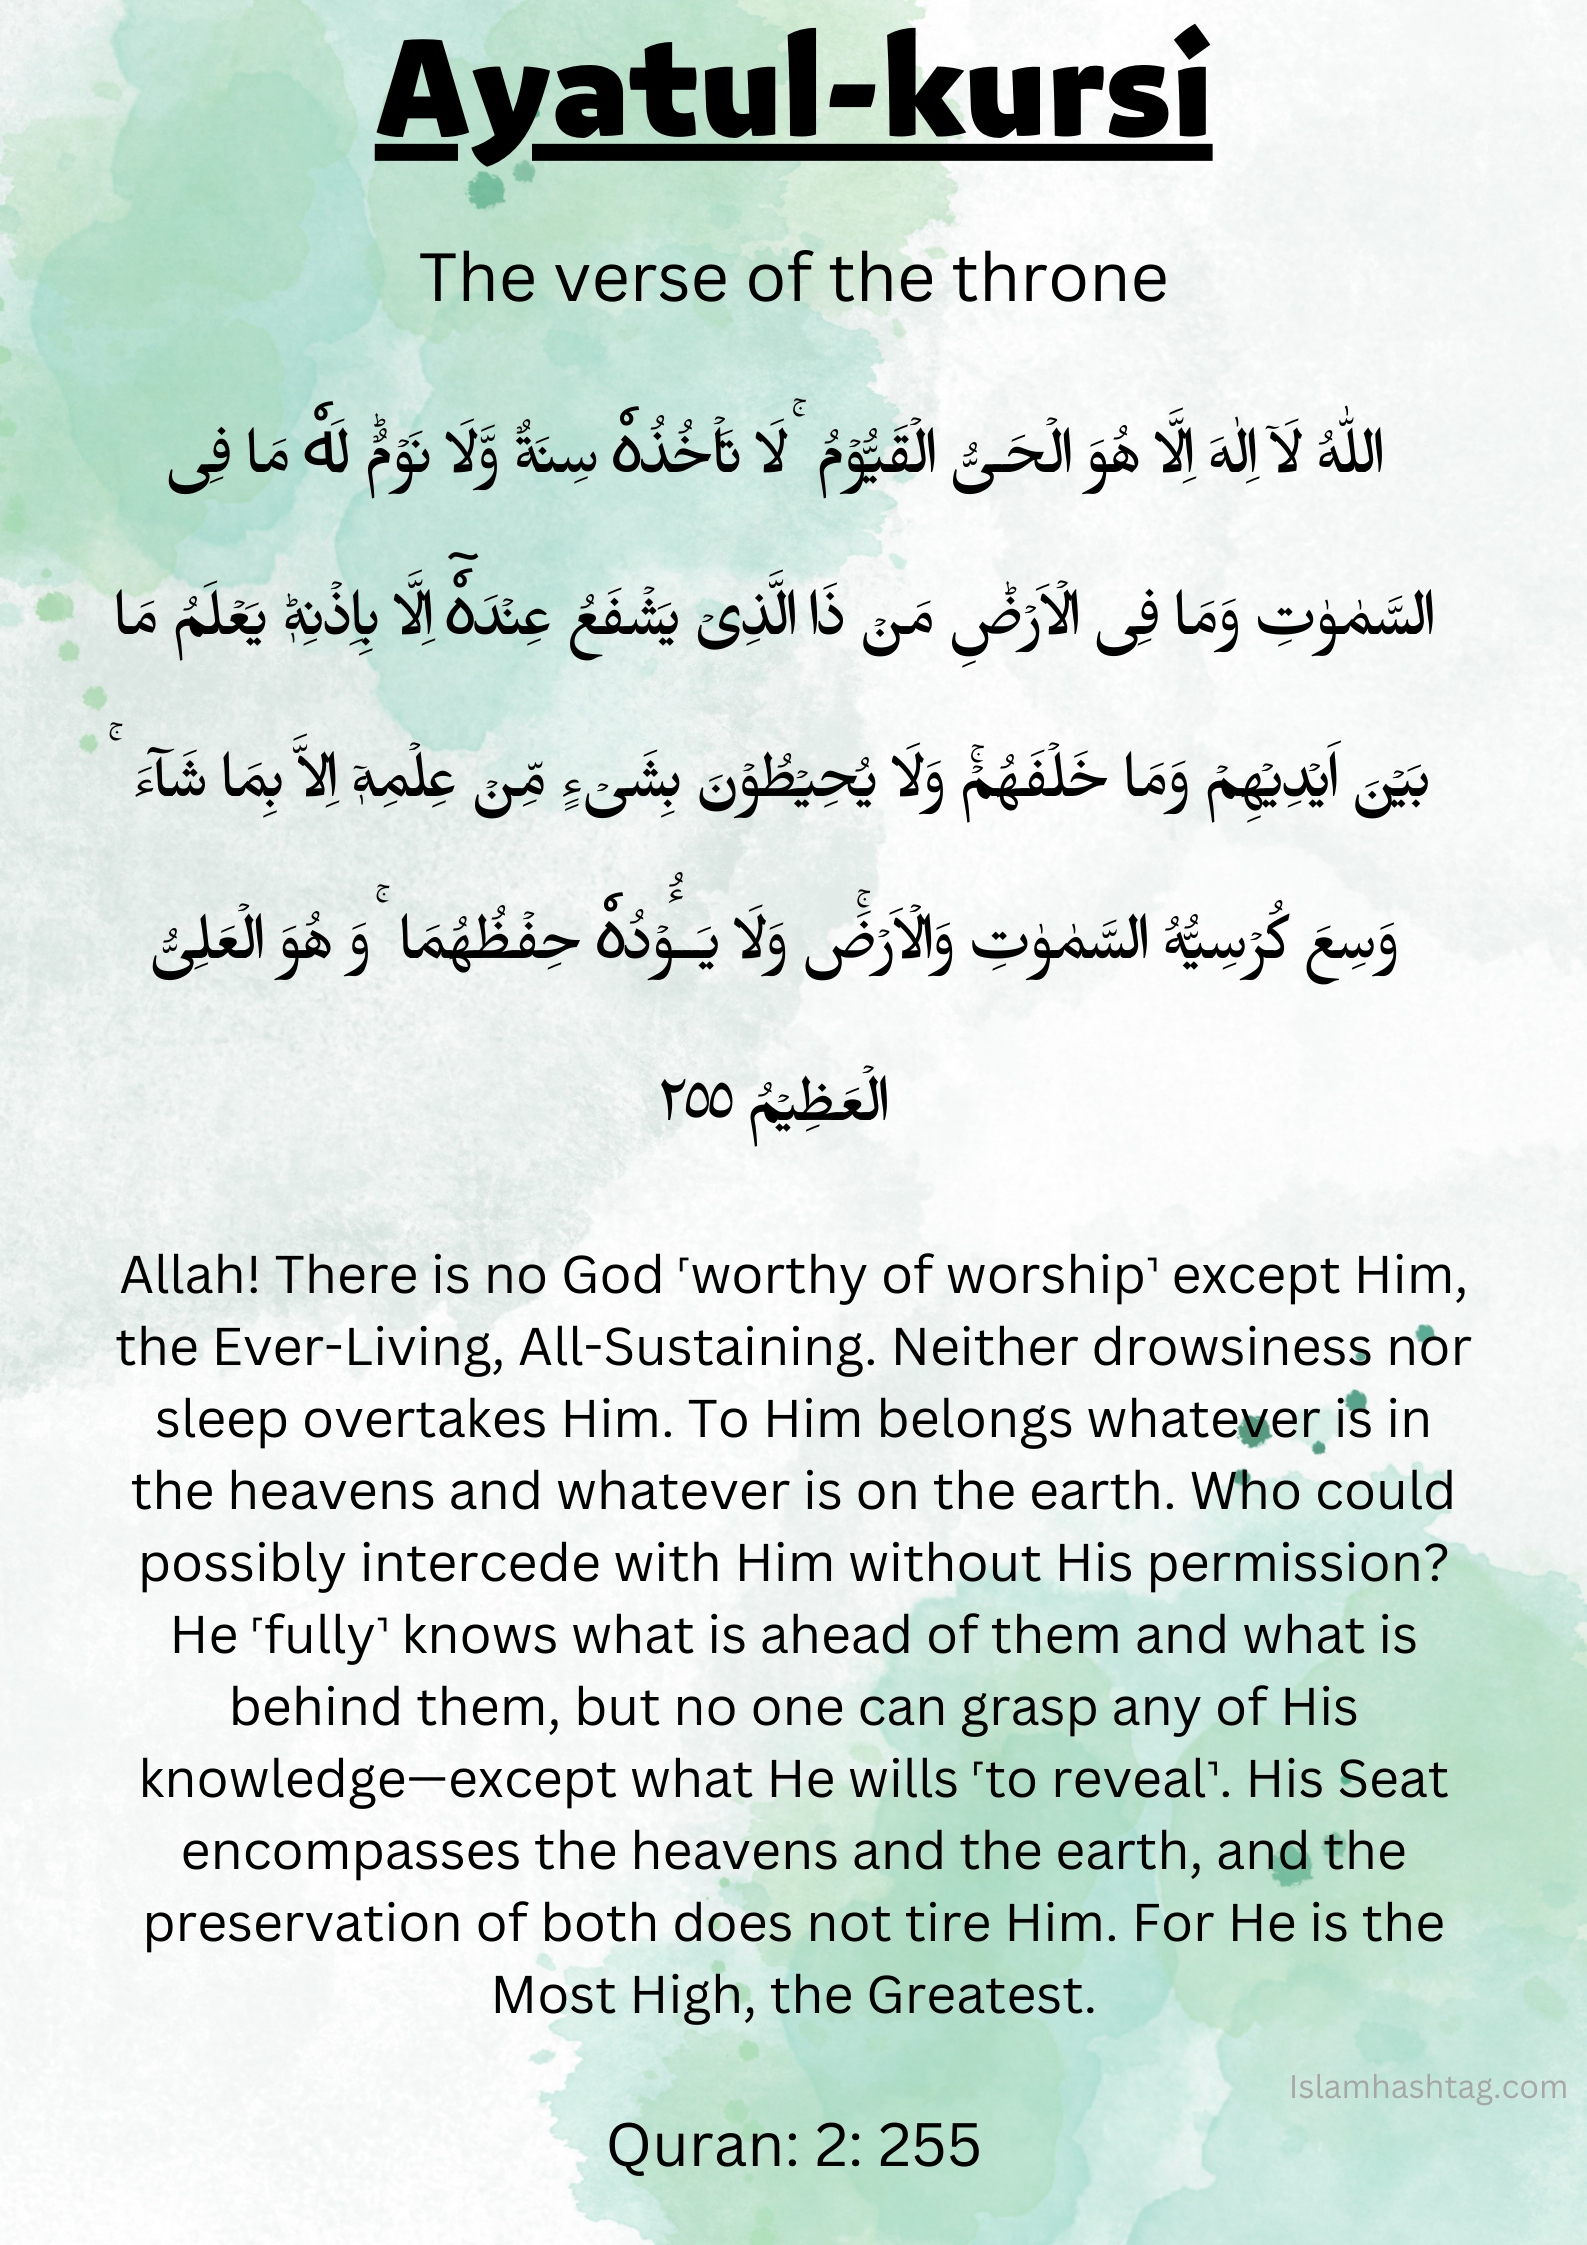 ayatul-kursi in english and arabic poster